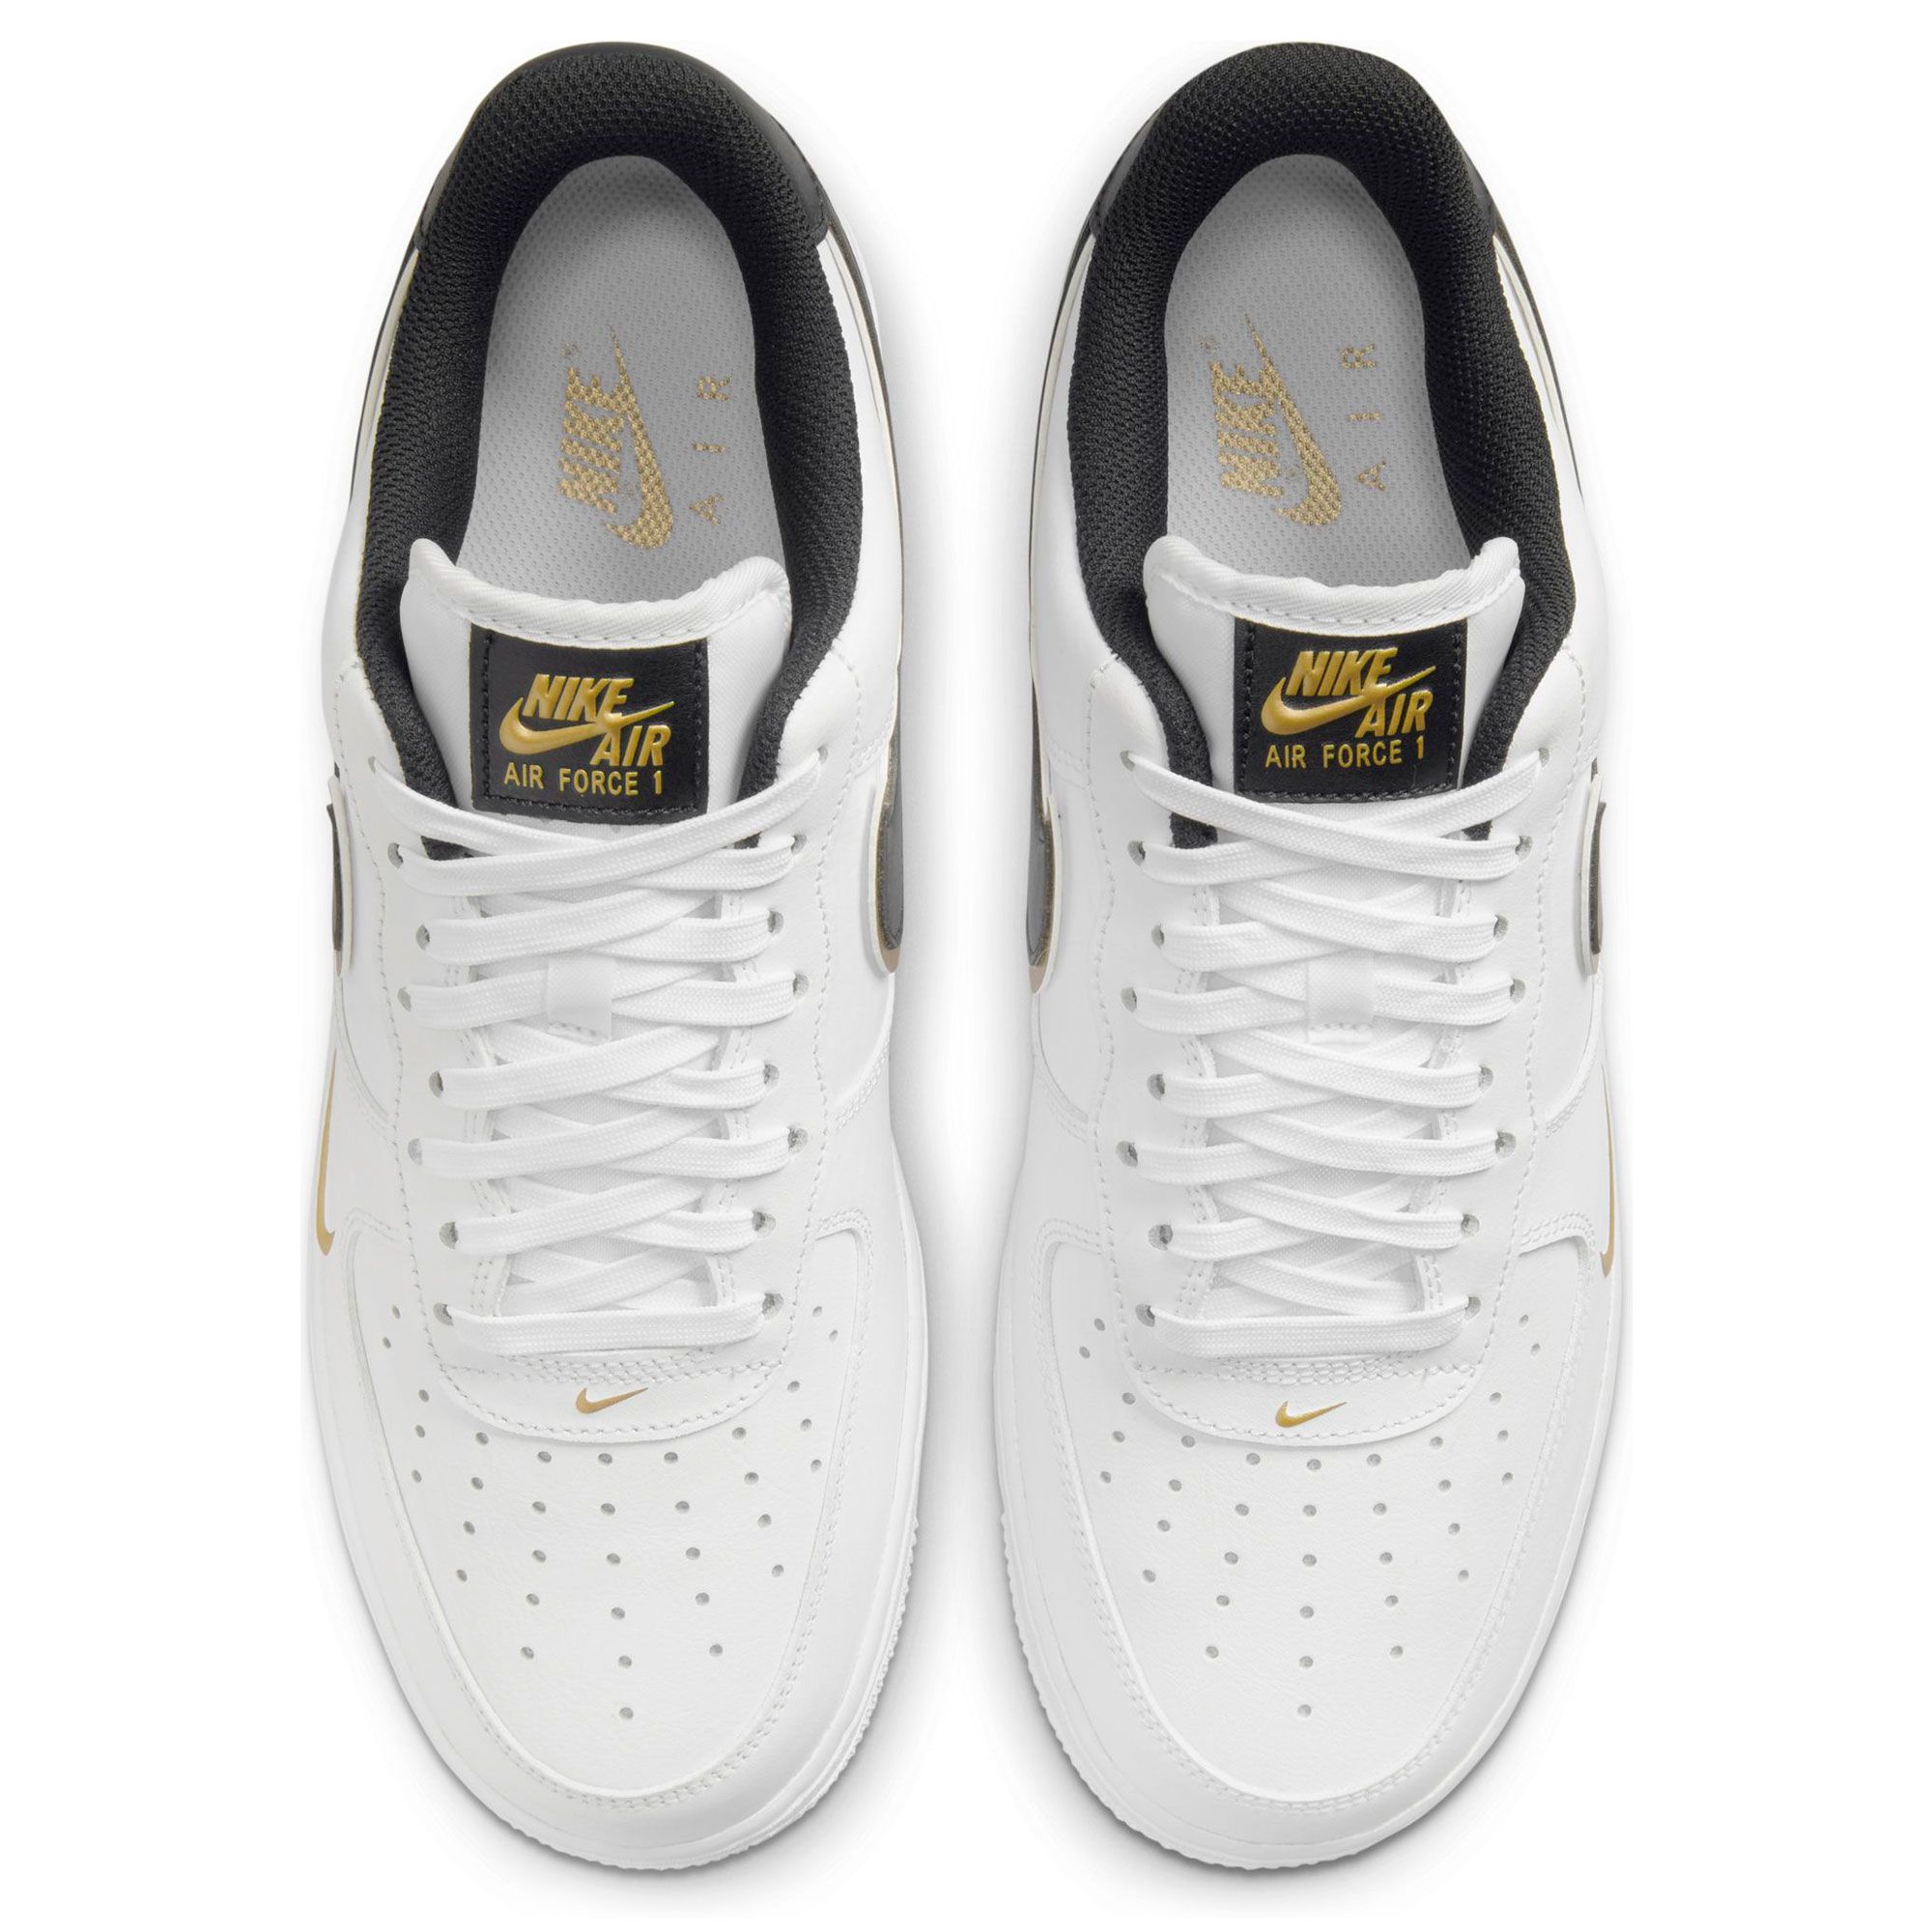 Nike Air Force 1 '07 LV8 Black/Metallic Gold/White Men's Shoe